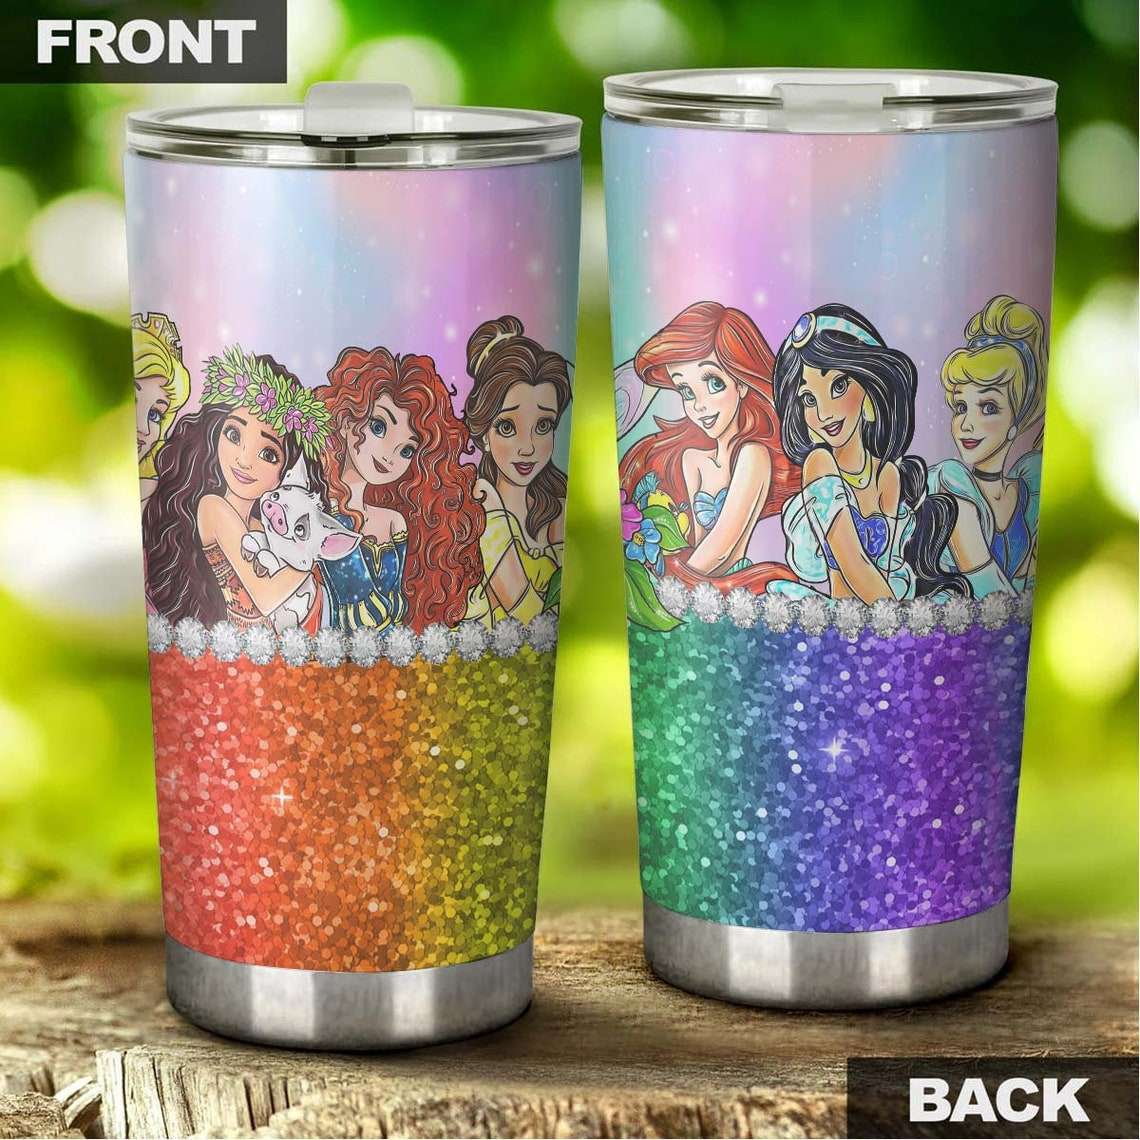 https://musicdope80s.com/wp-content/uploads/2023/02/Cartoon_Movie_Disney_Princess_Colorful_Rainbow_Bling_Glitter_Stainless_Steel_Tumbler_For_Disney_Fan_hihzu9.jpg